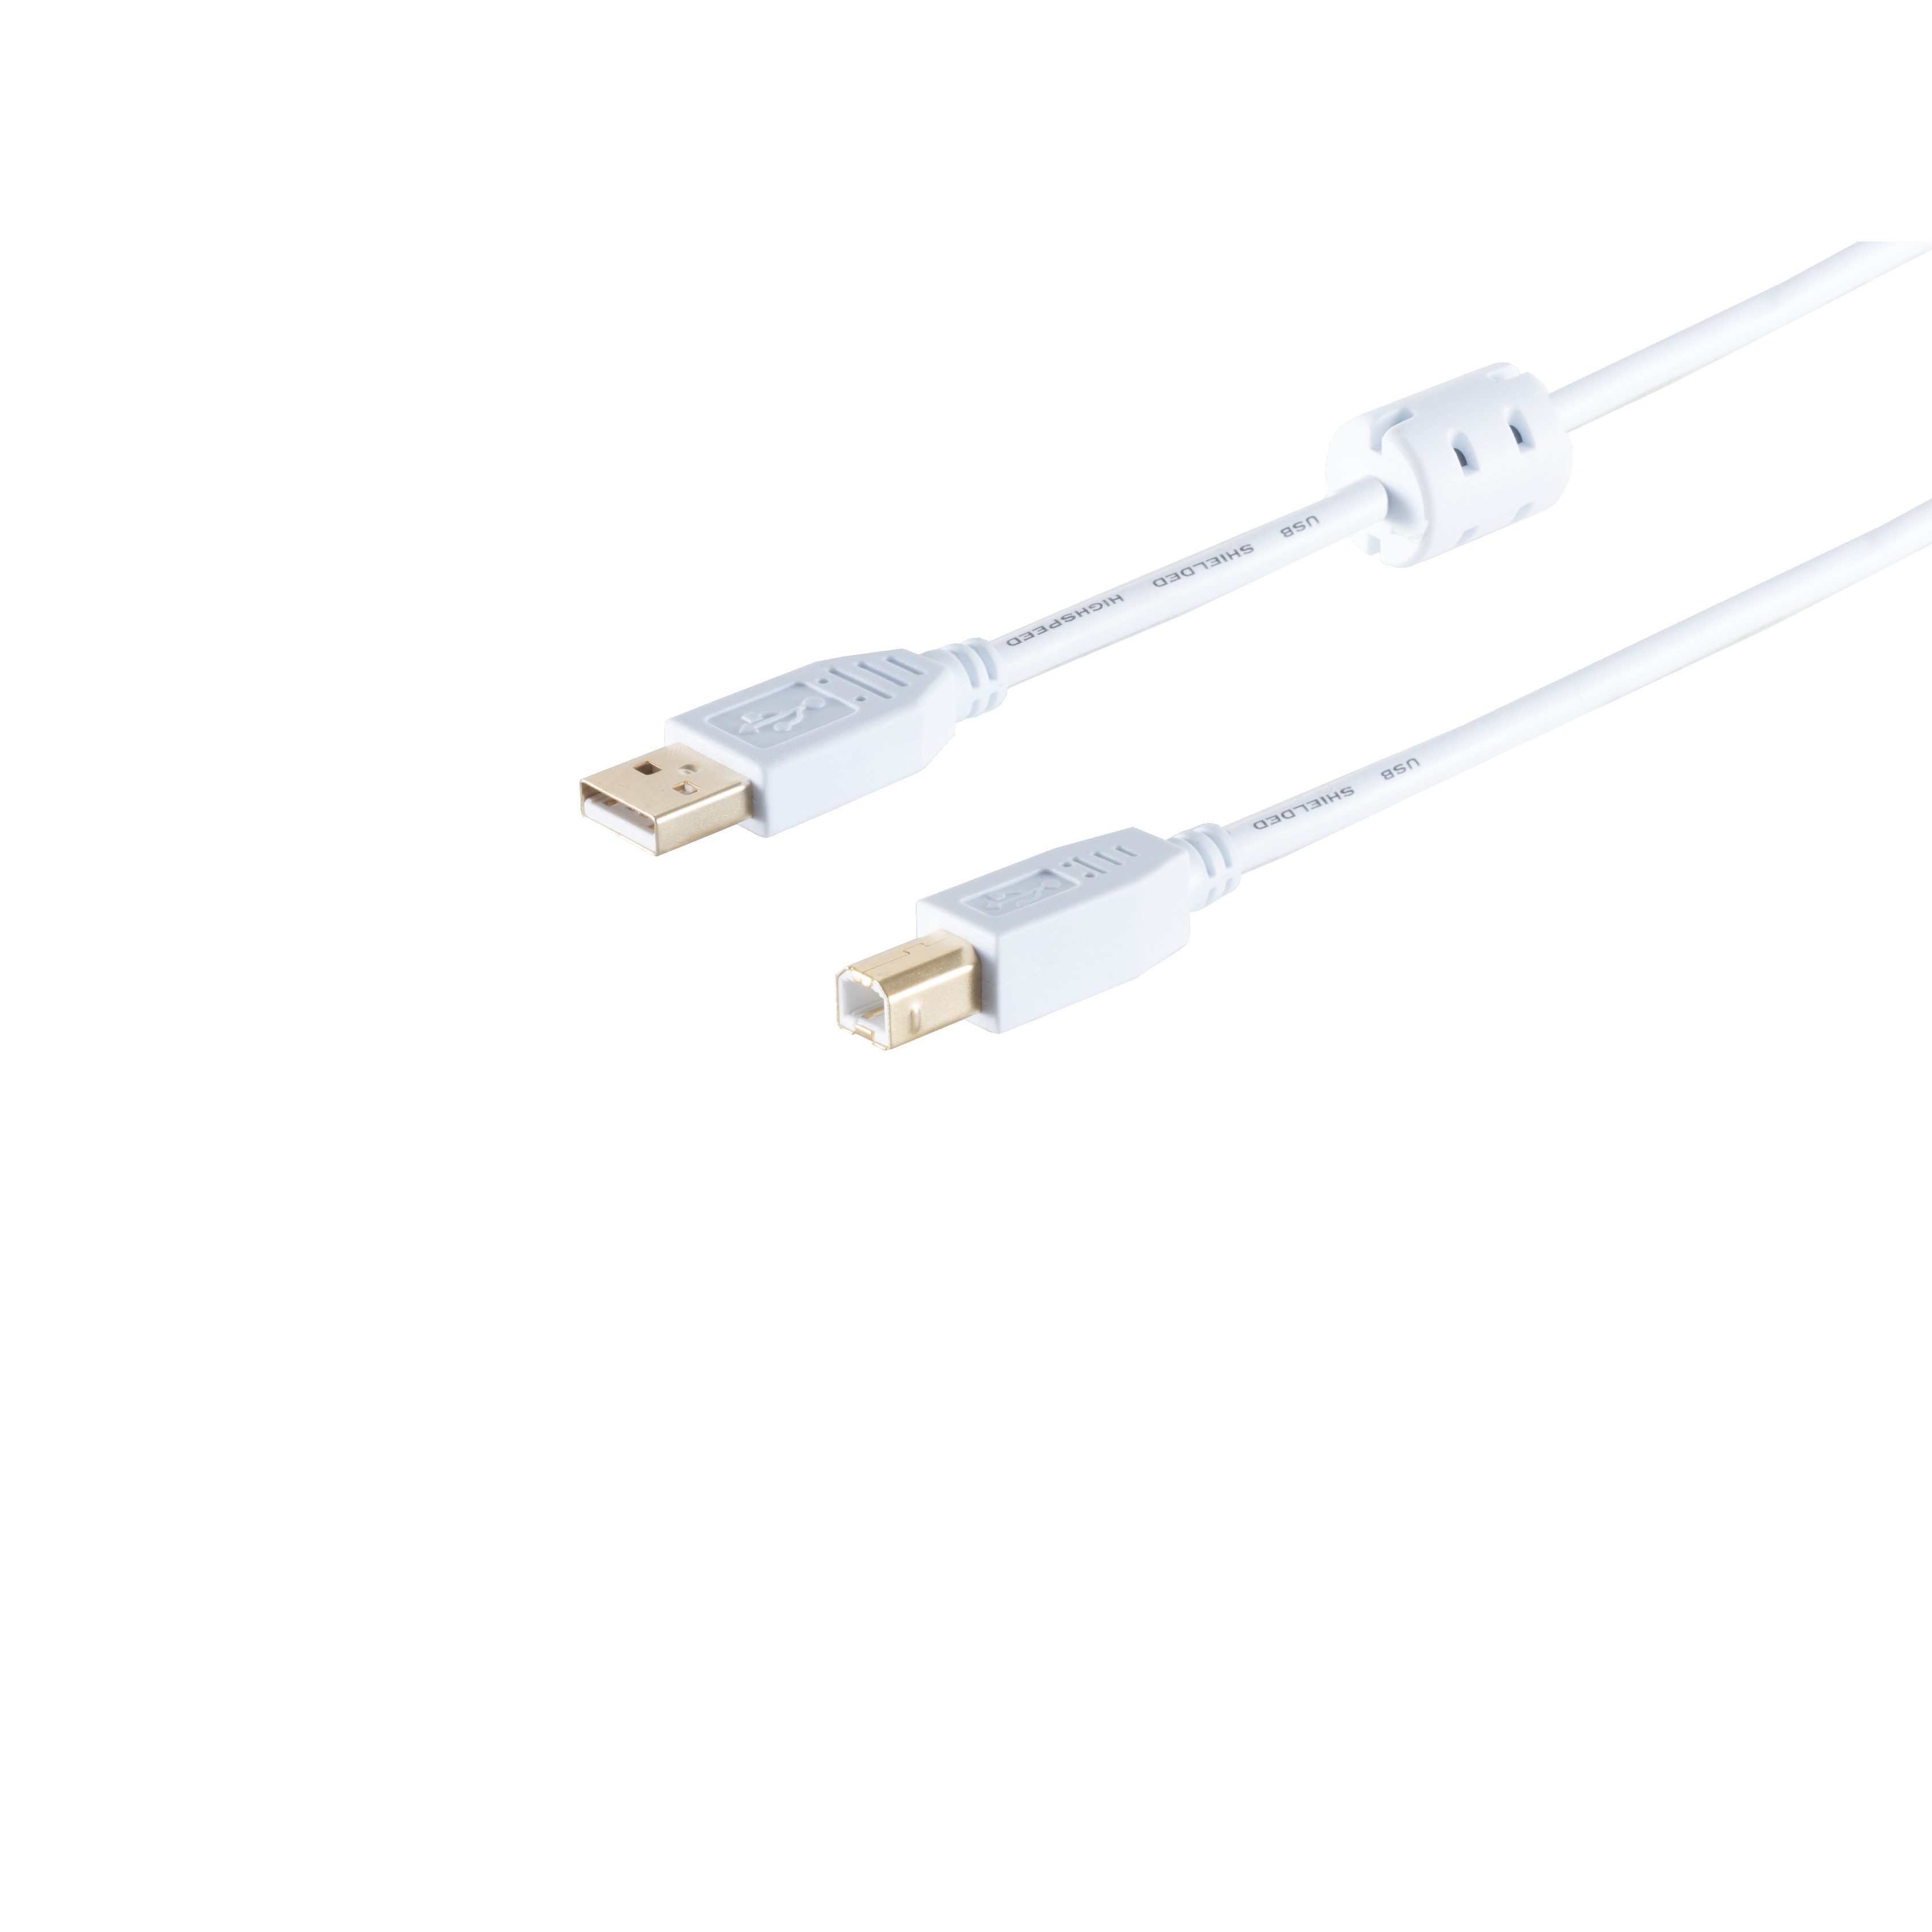 A/B MAXIMUM USB weiß, Kabel 5,0m USB USB S/CONN 2.0 Speed 2.0, Stecker, mit Ferrit, High Kabel CONNECTIVITY